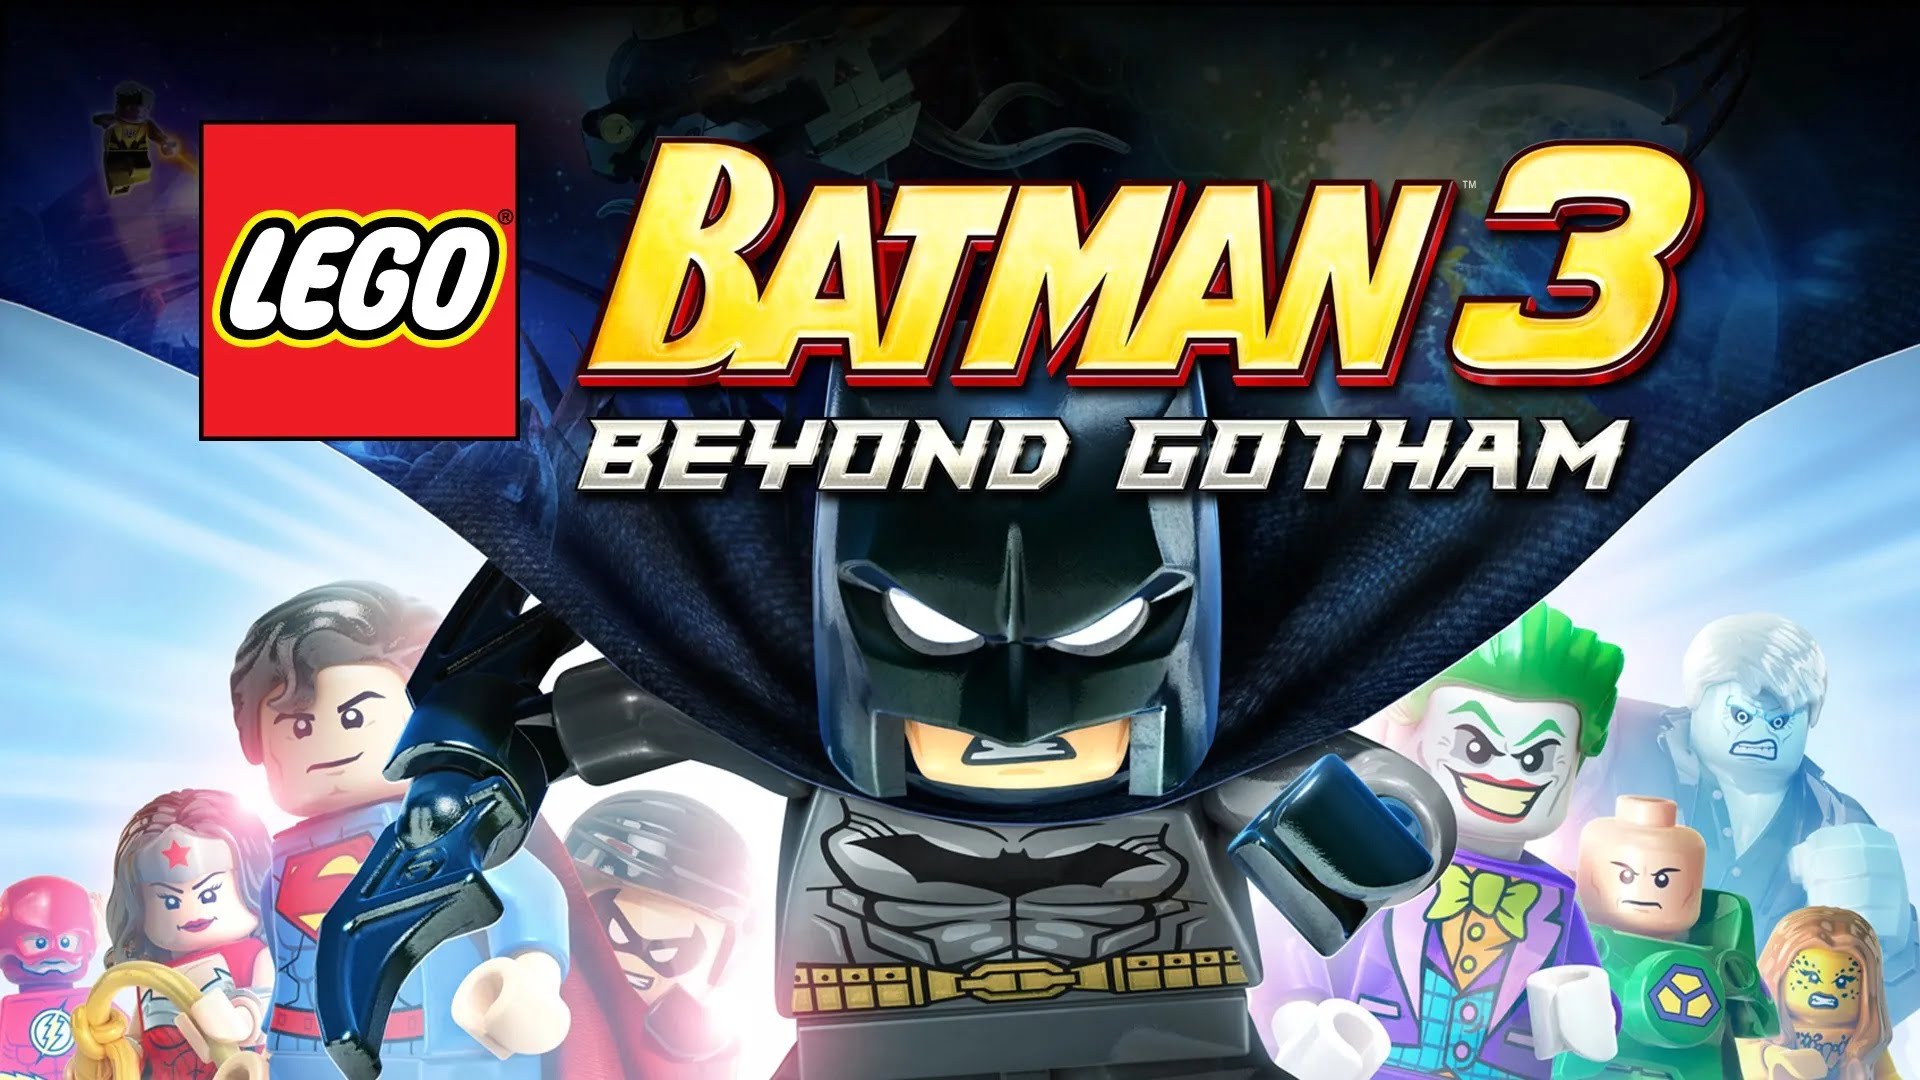 Lego Batman 3 Codes 2020 - Pivotal Gamers